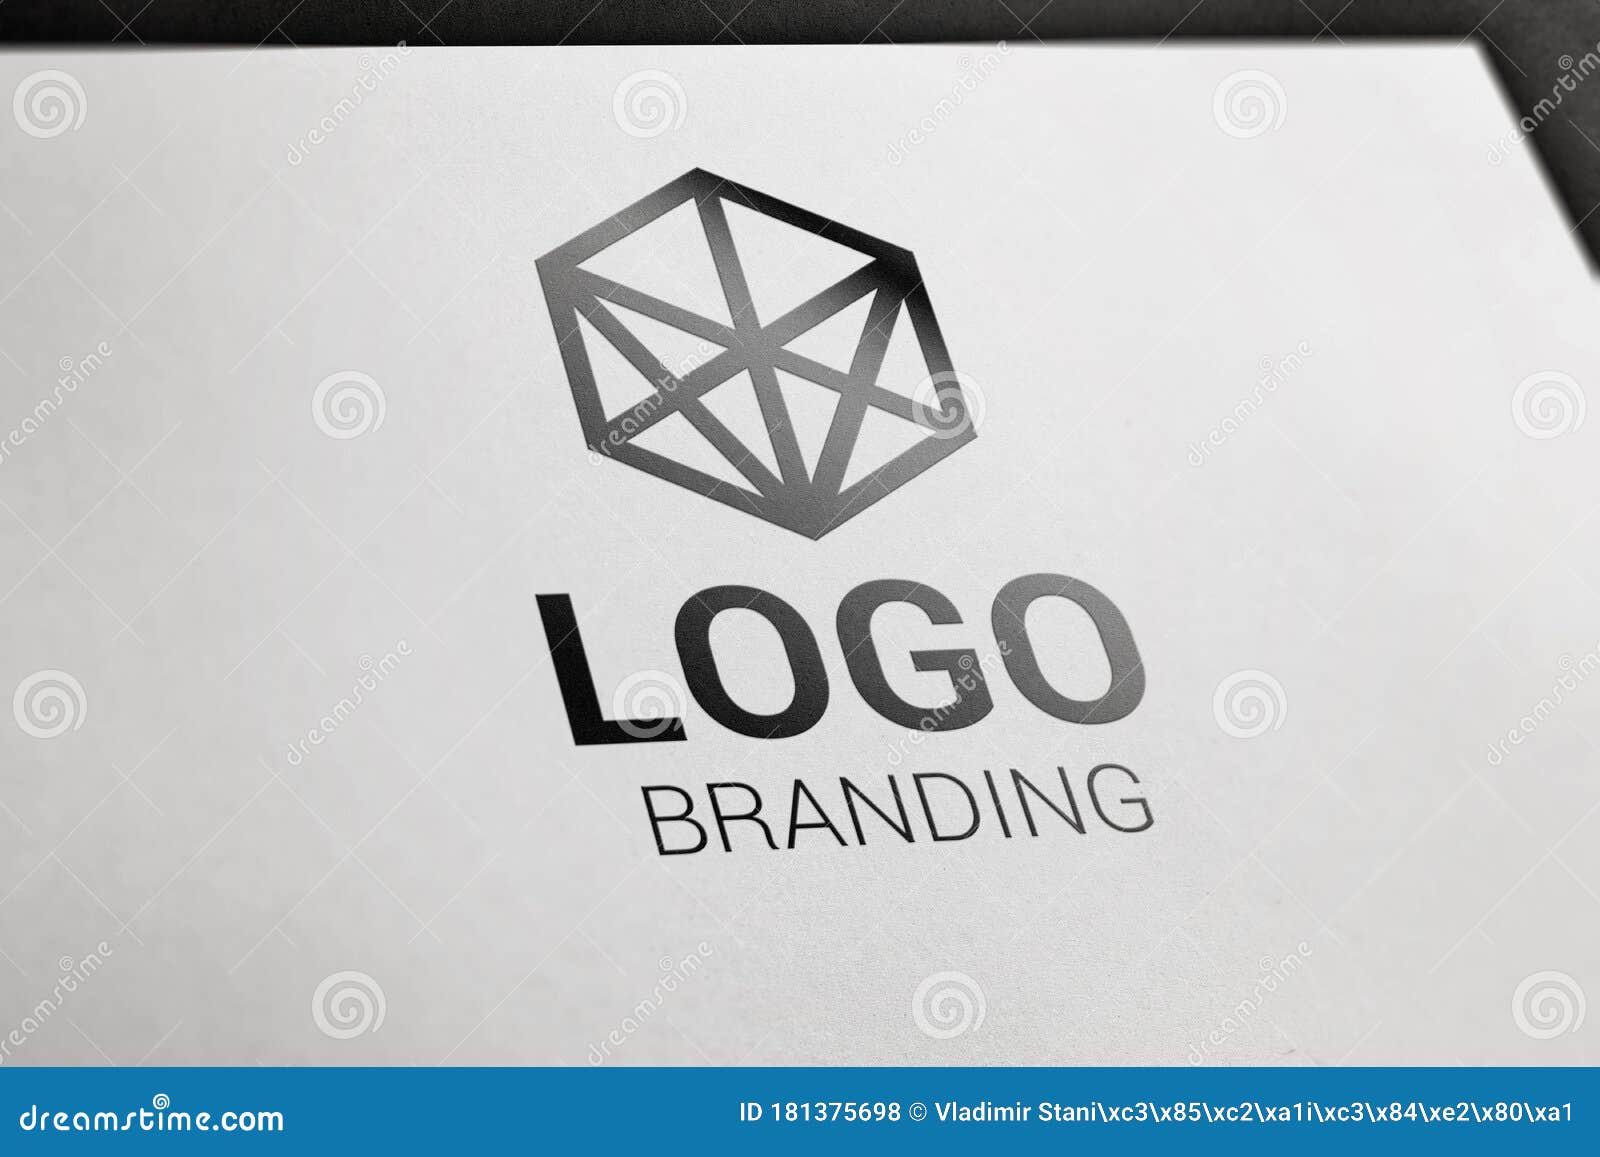 logo branding concept on white paper. profesional logo  company presentation